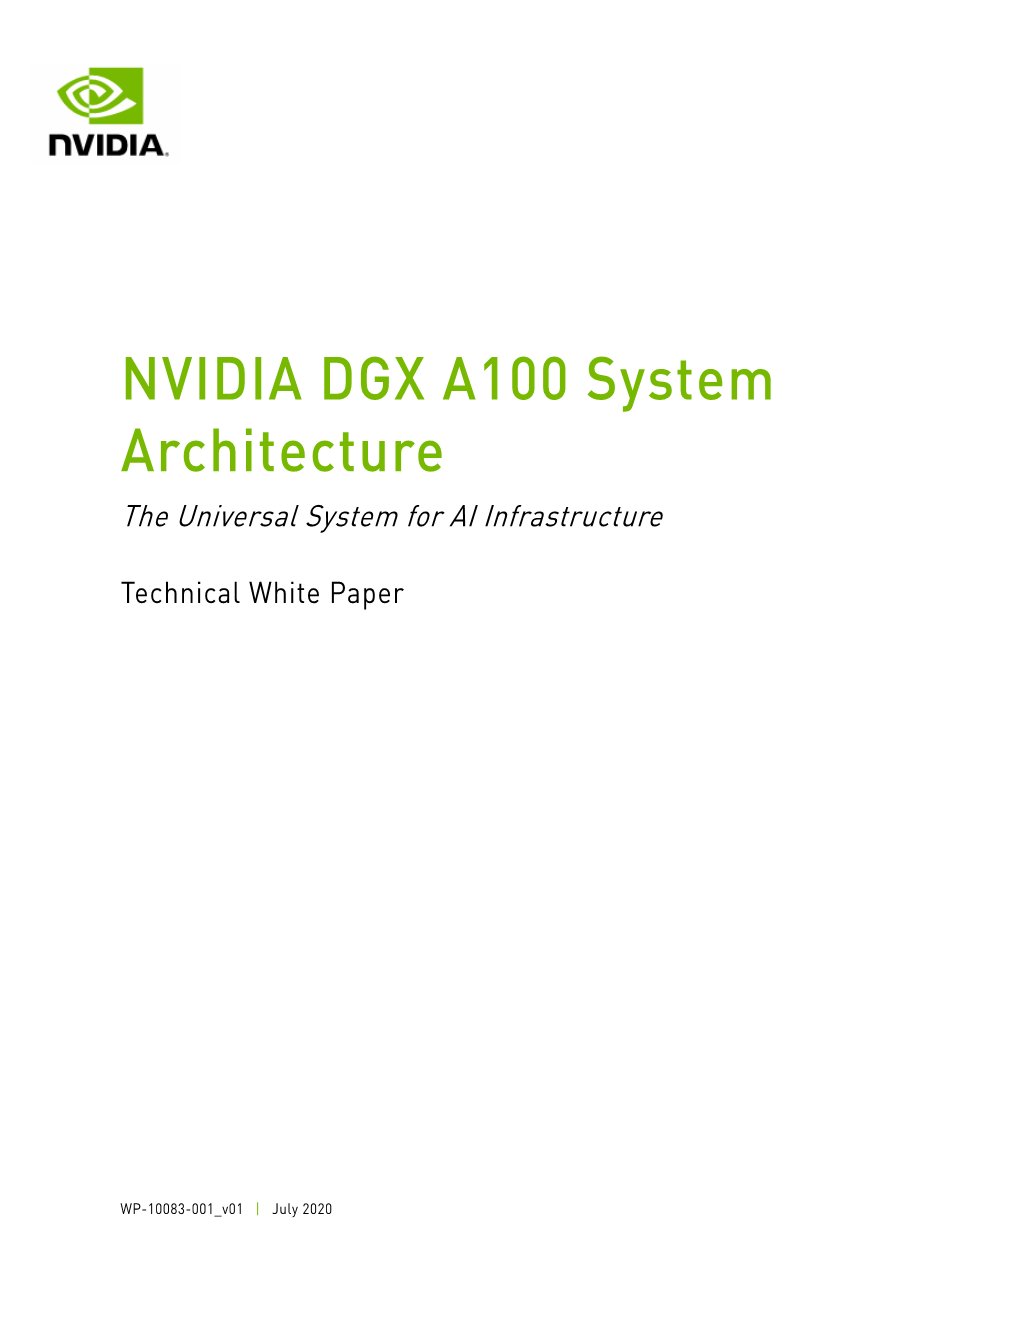 NVIDIA DGX A100 System Architecture